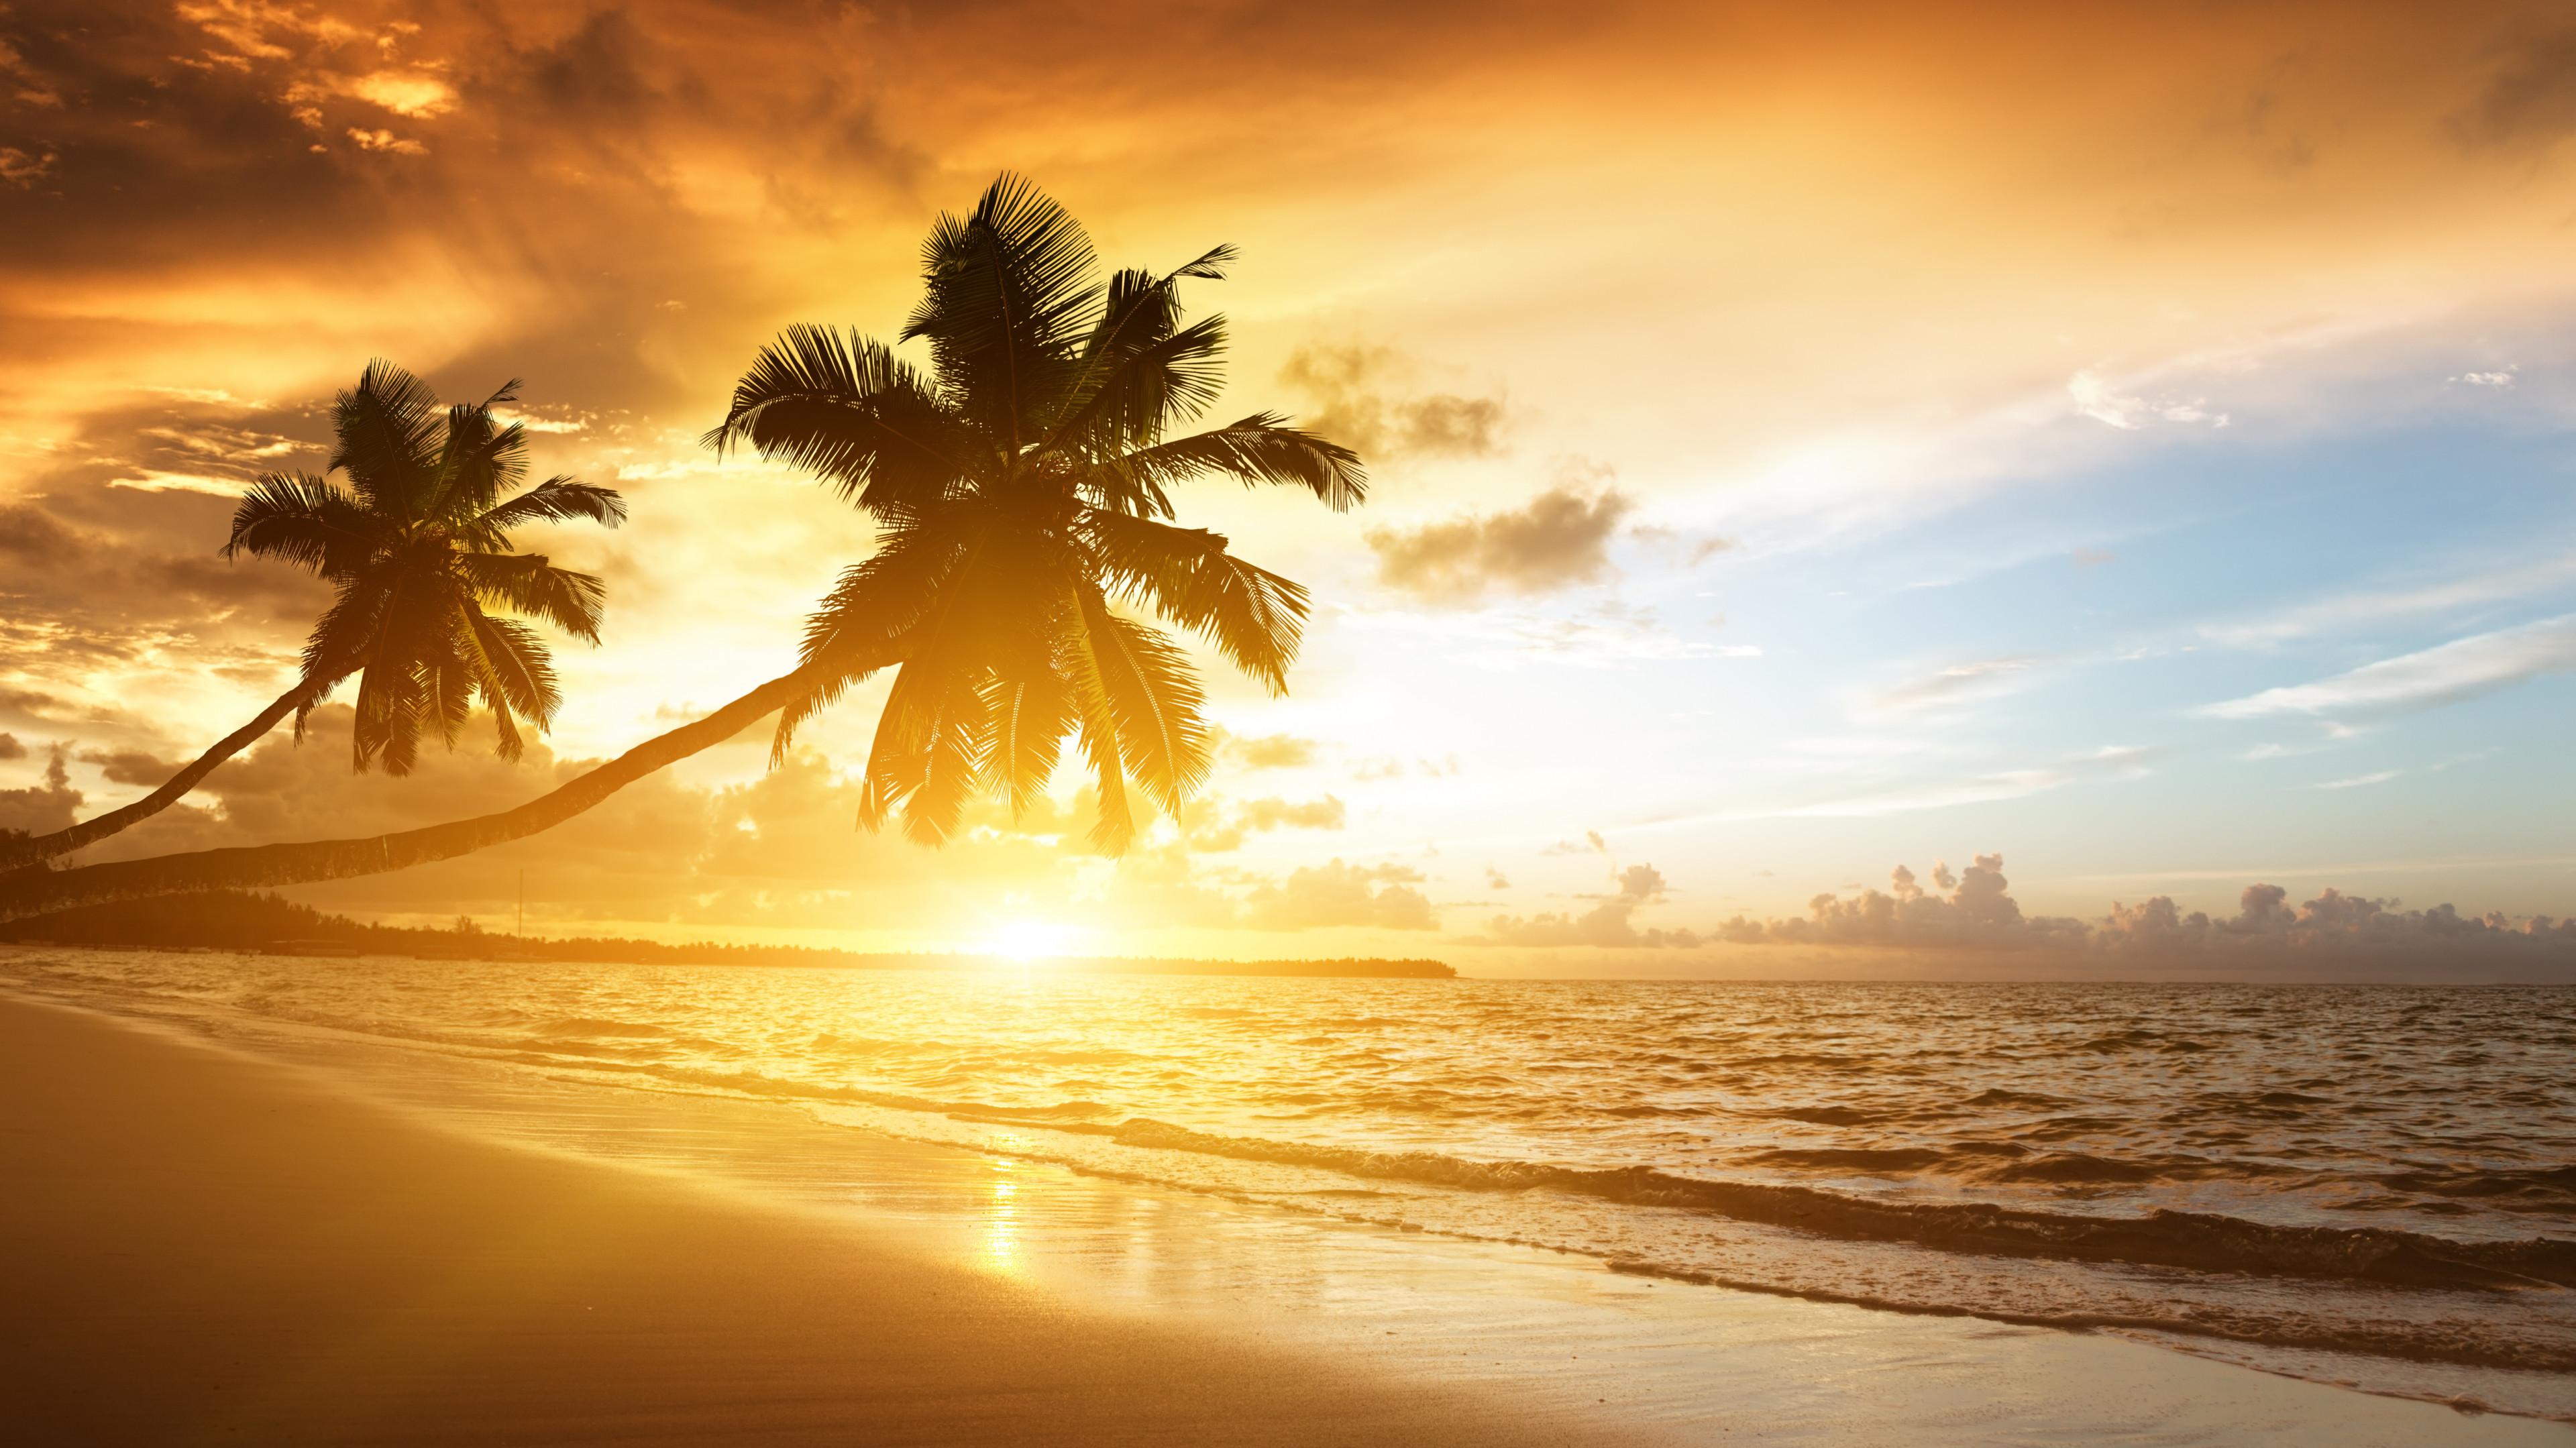 Wallpaper Beach 5k 4k Ocean Sunset Palm Trees